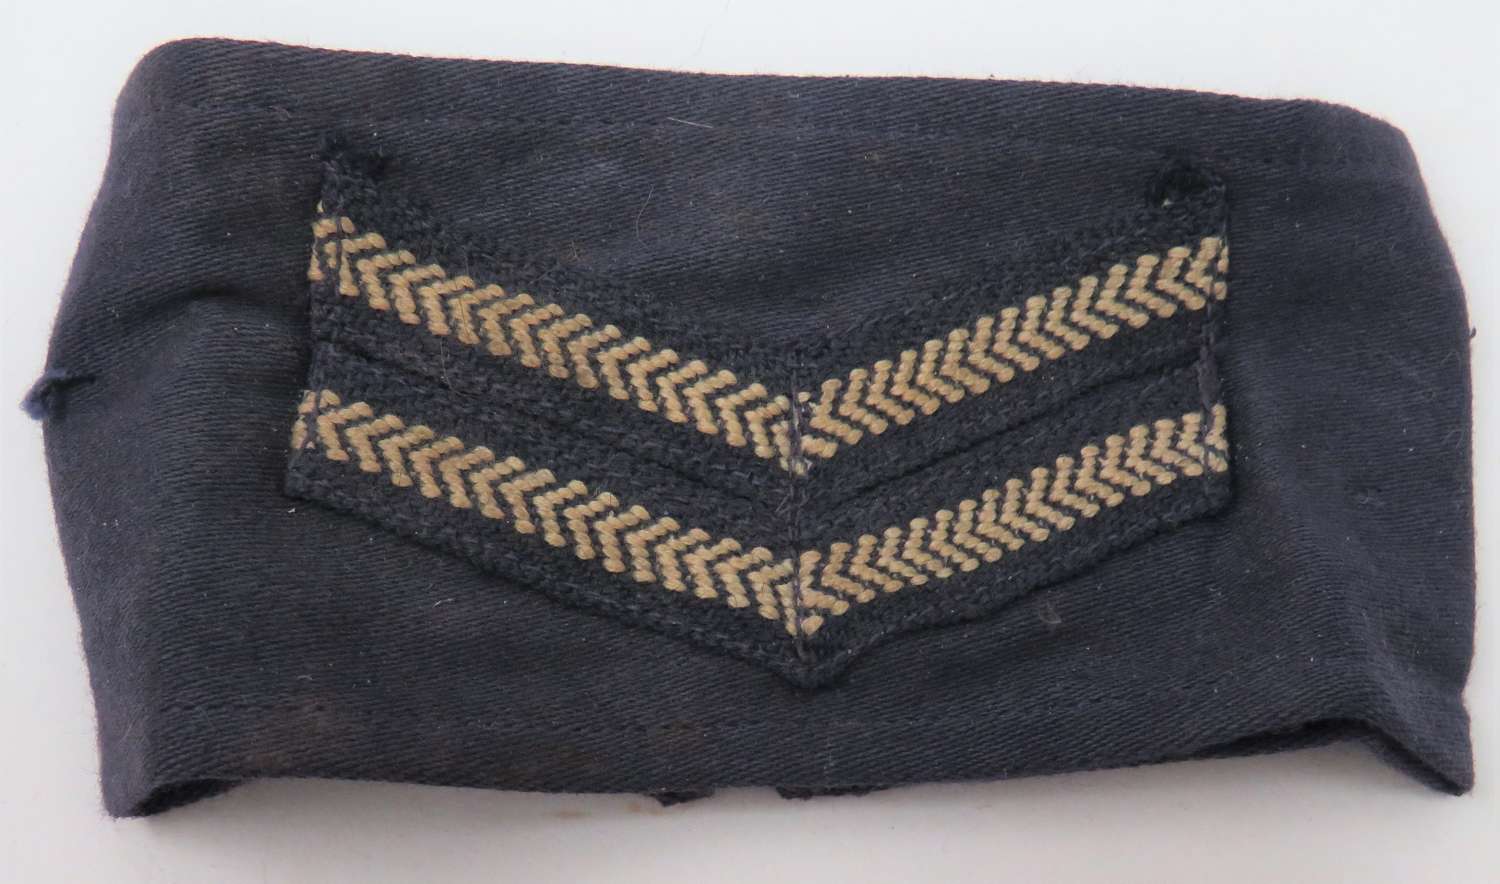 Royal Air Force Corporal Rank Stripe Armband